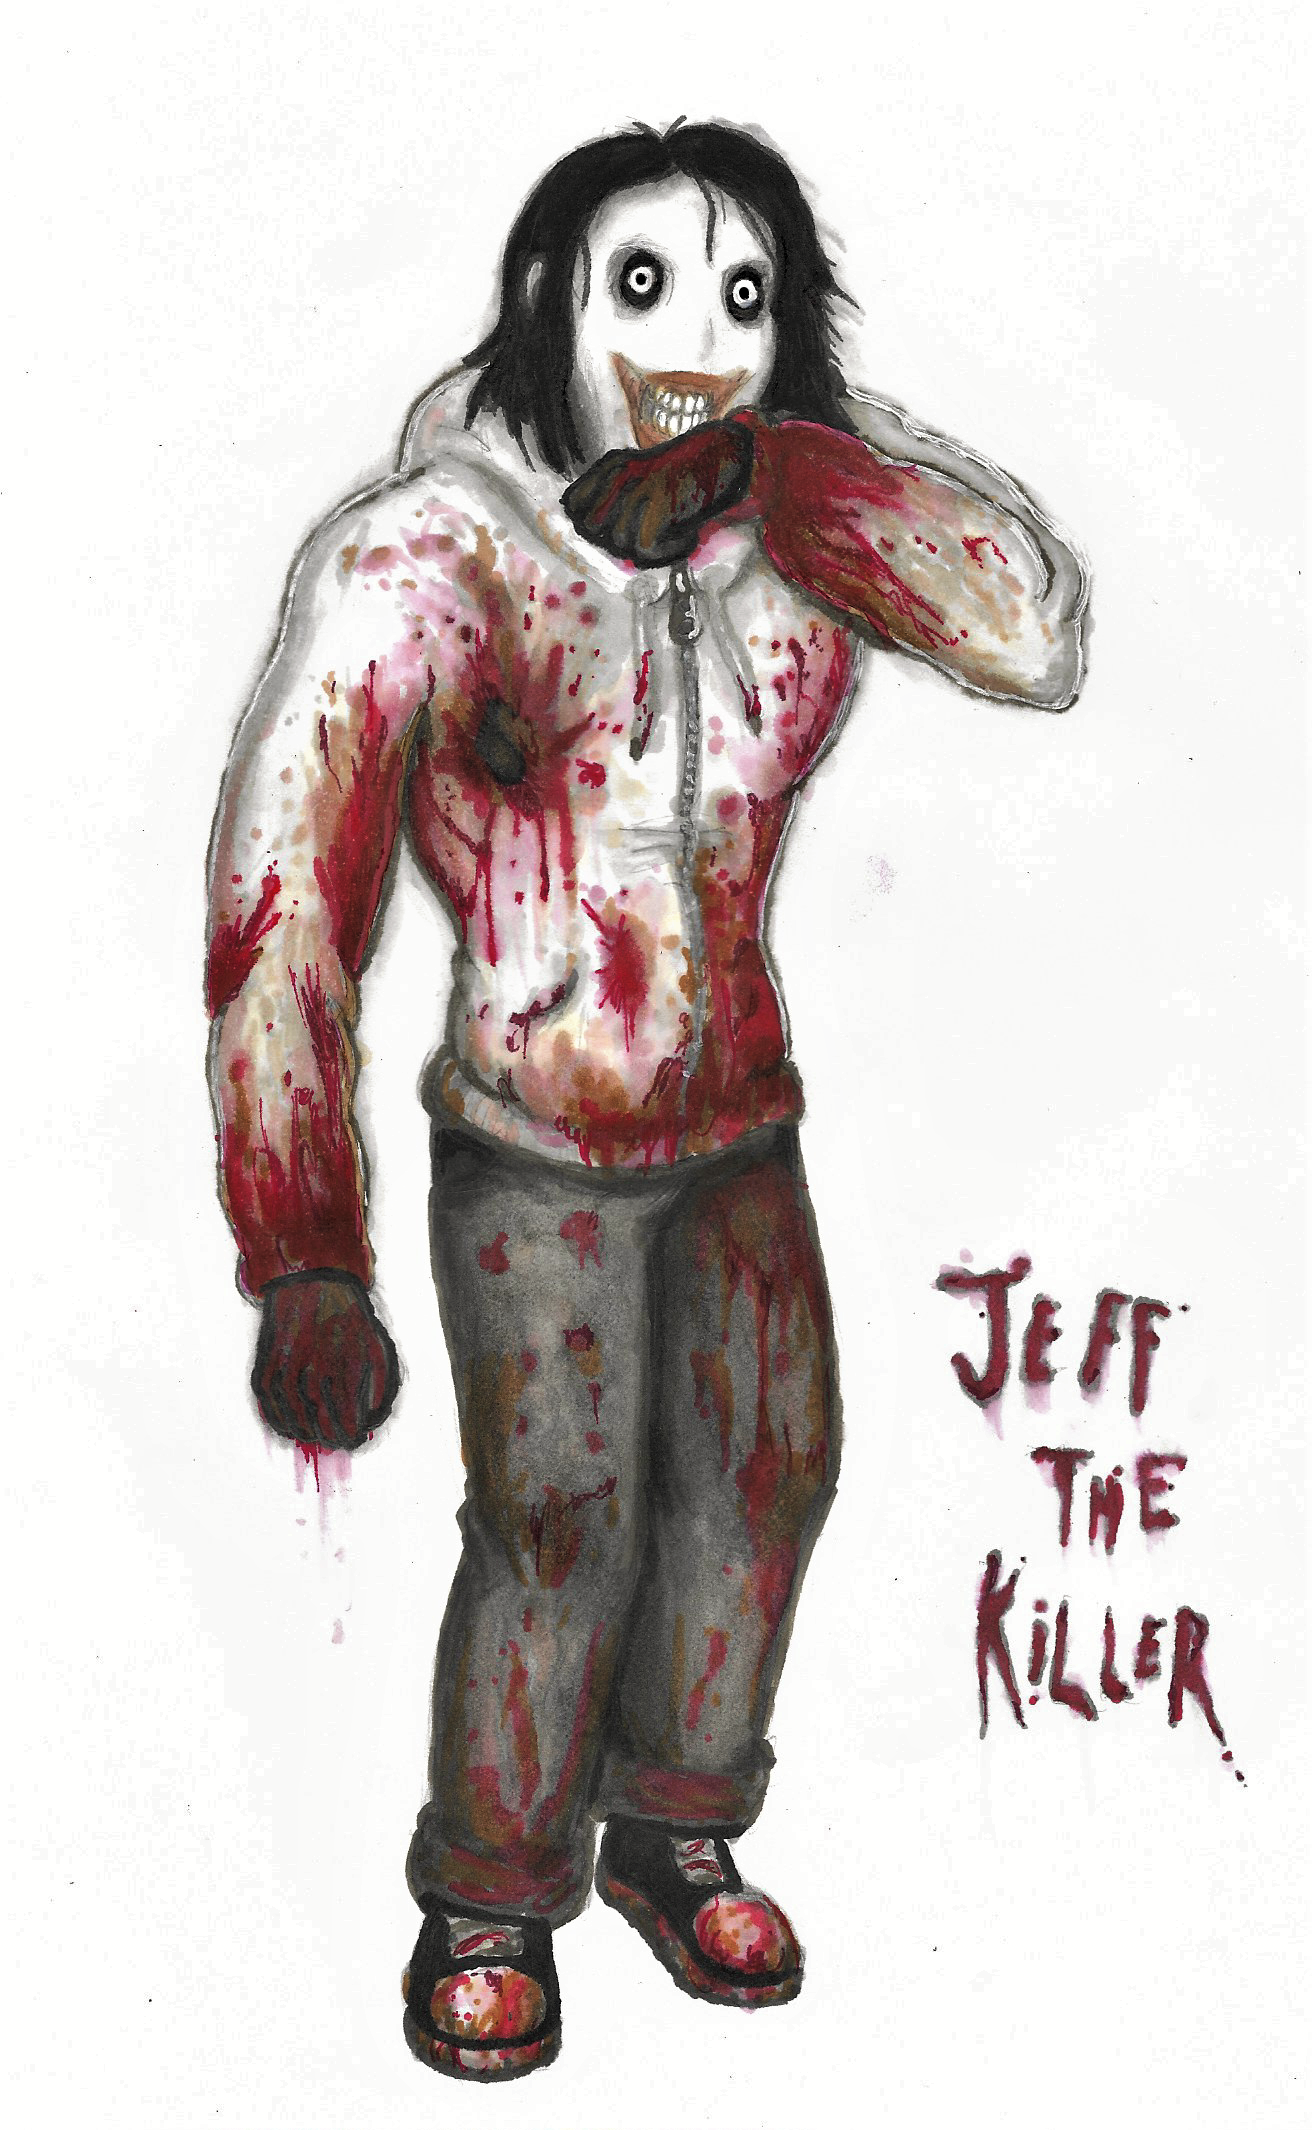 jeff the killer and jeff the killer (creepypasta) drawn by dazz_chan